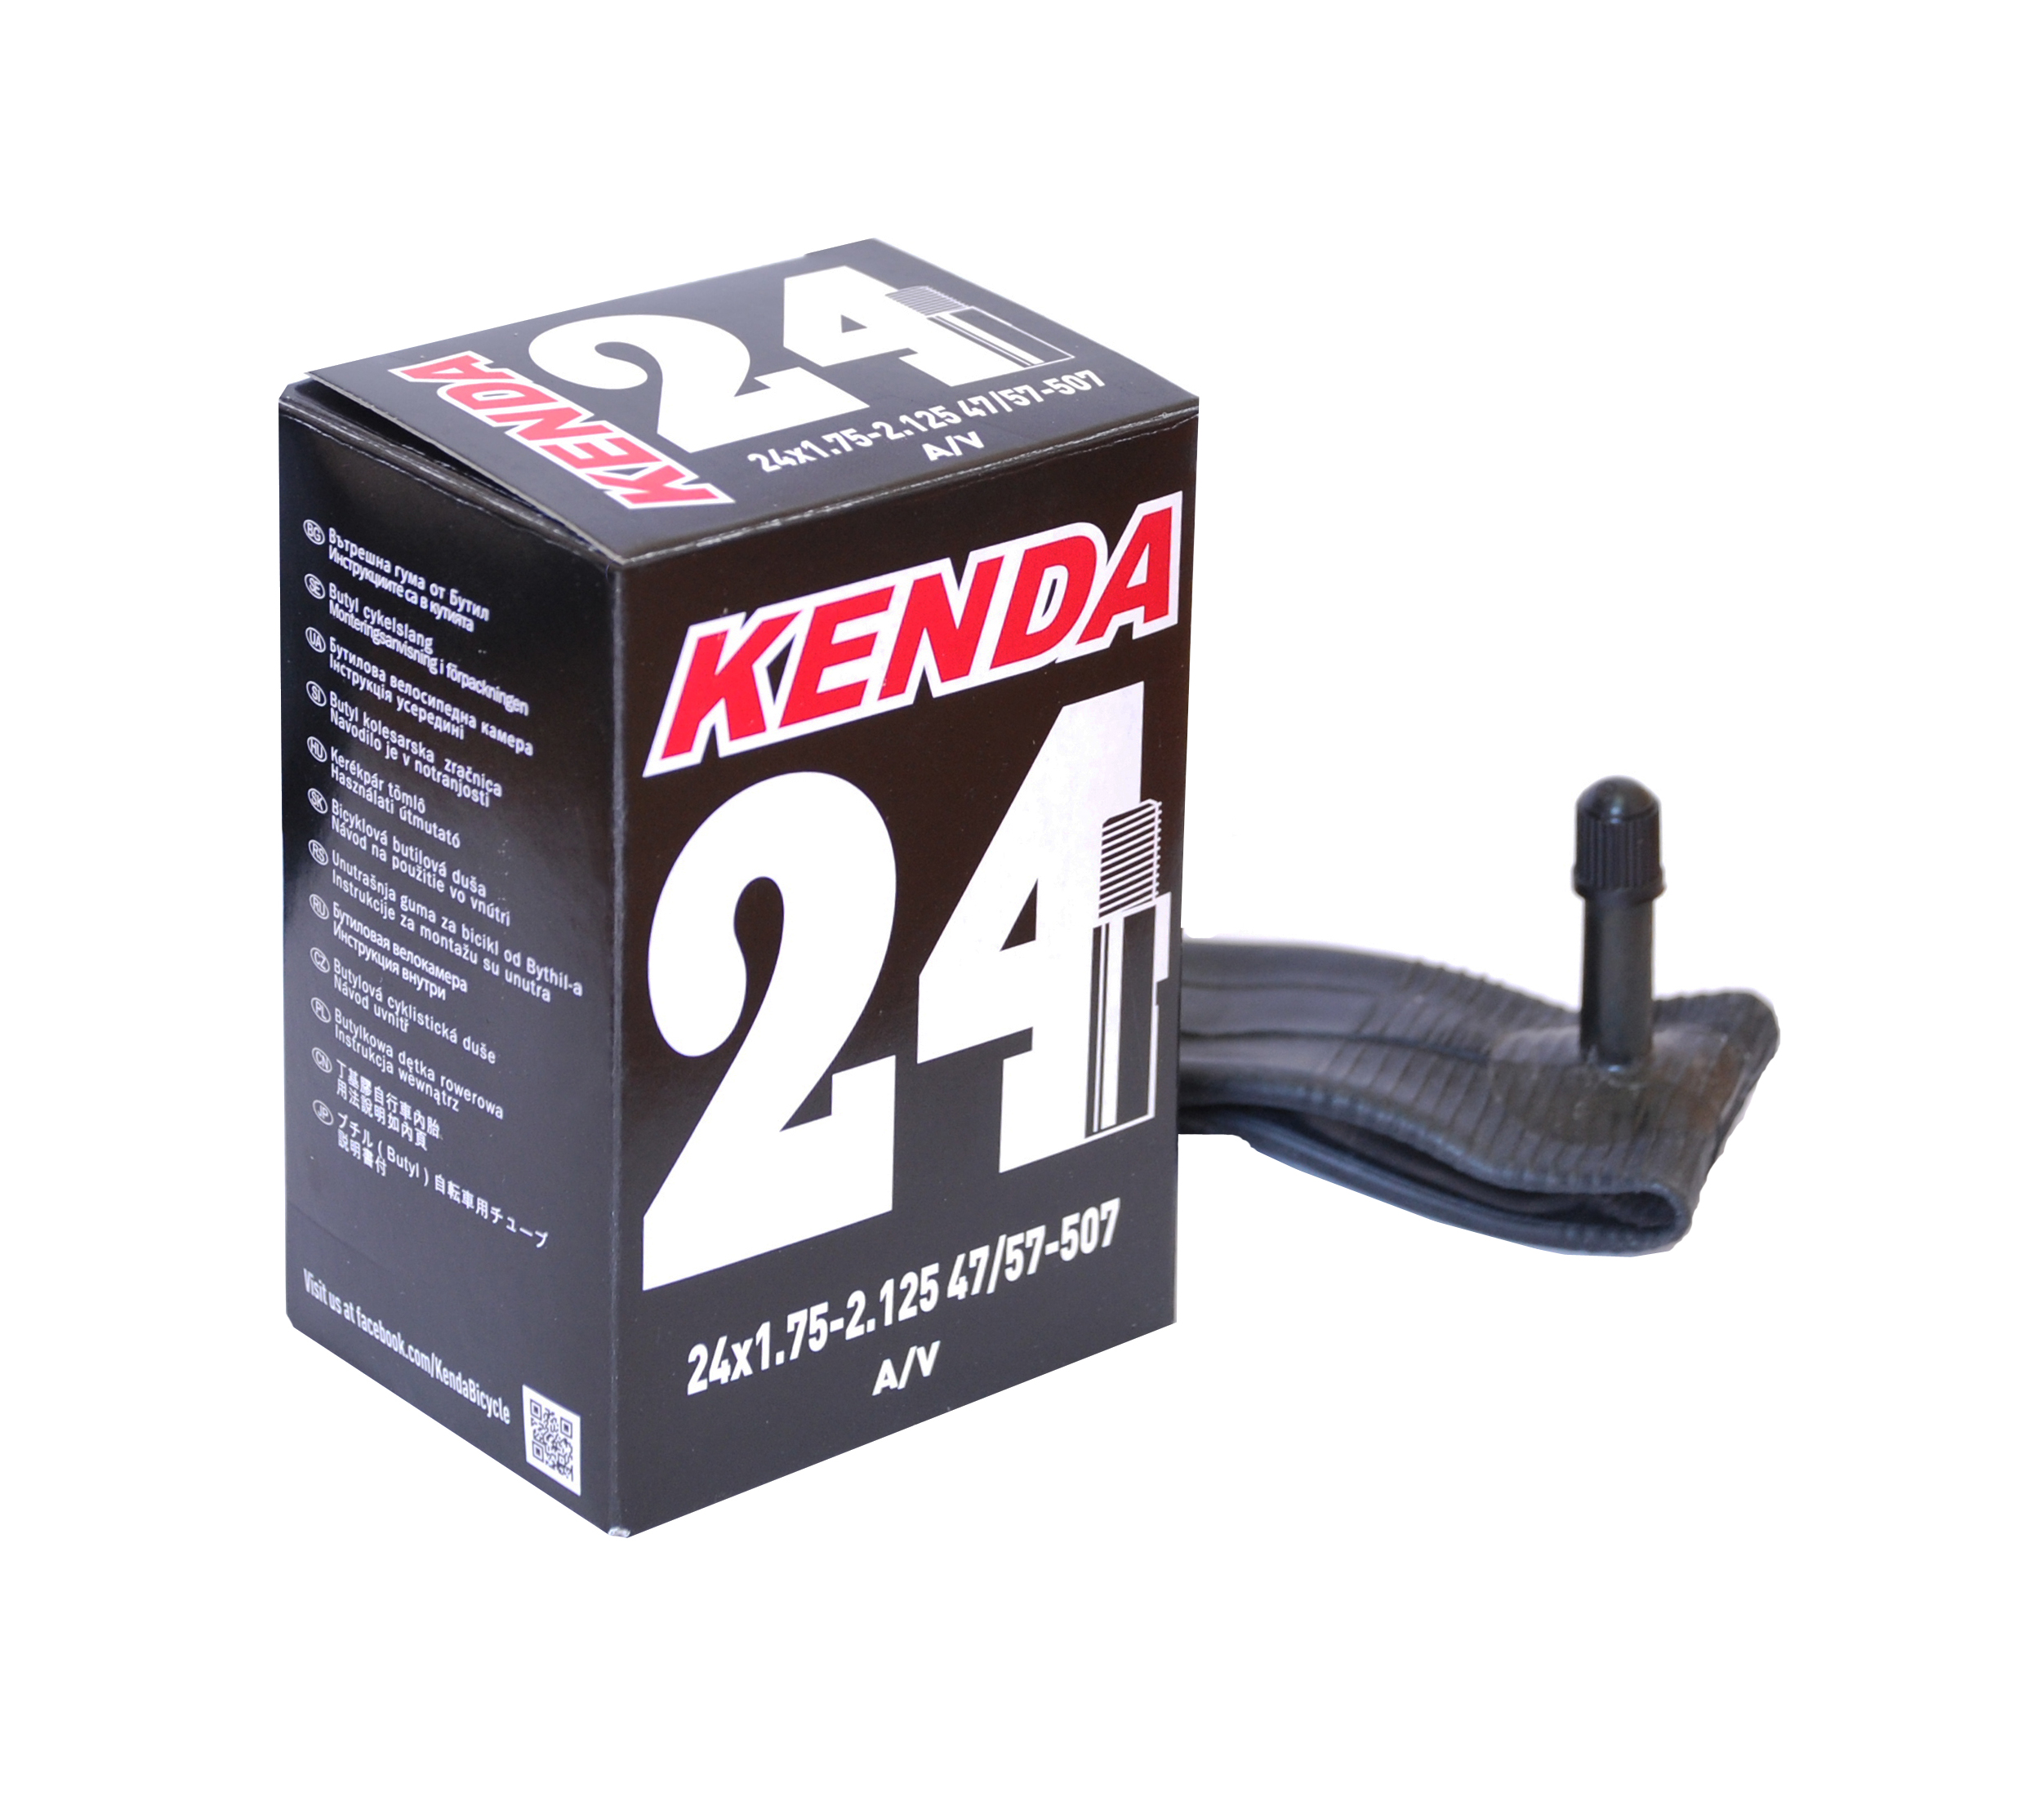 Камера 24", KENDA 1,75х2,125 (47/57-507) авто